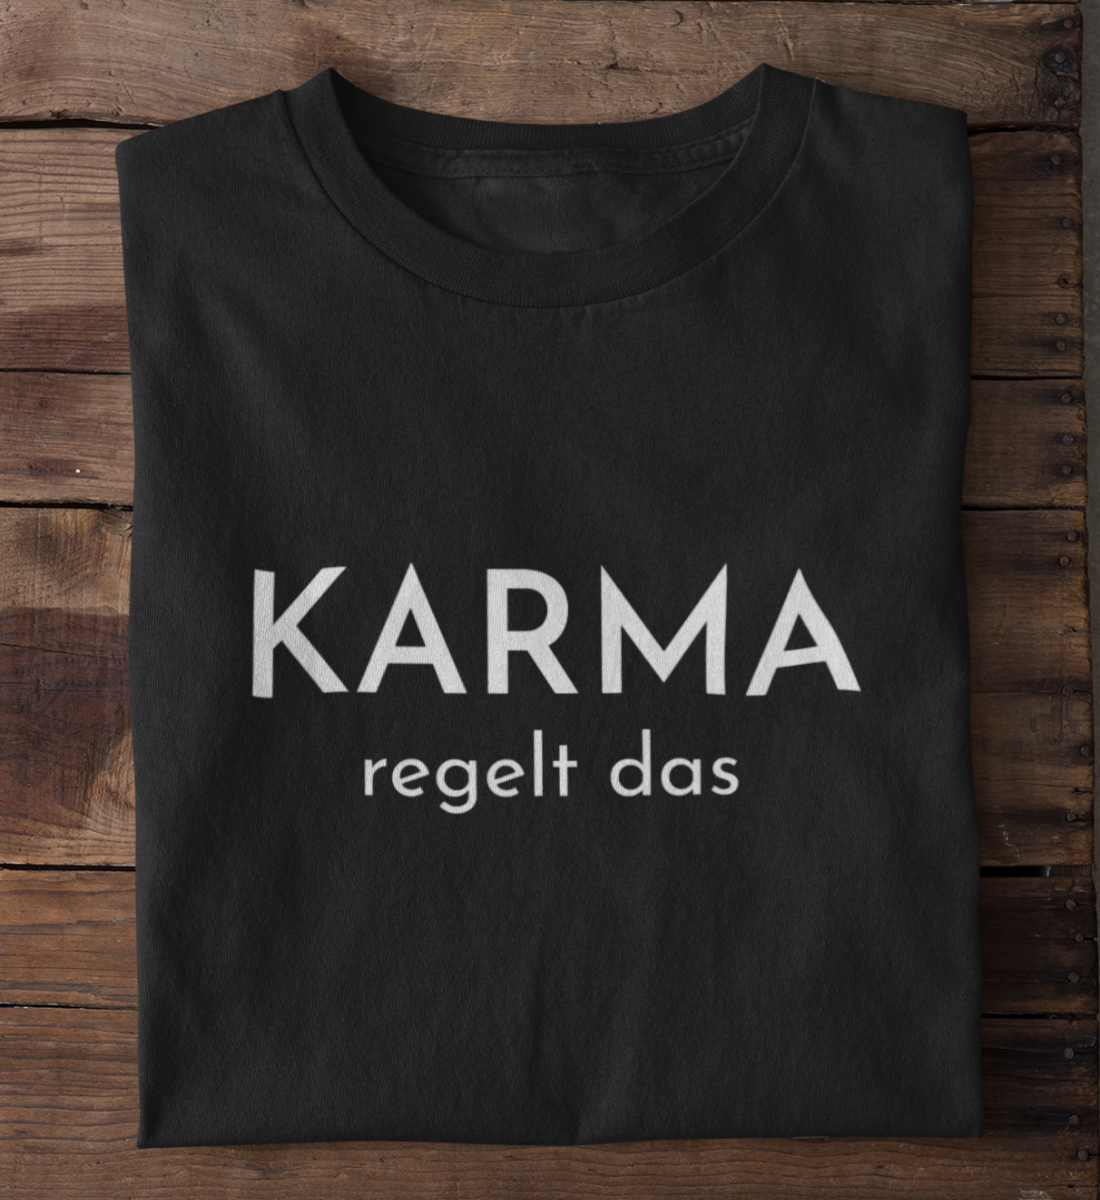 Karma regelt das 100% Bio T-Shirt